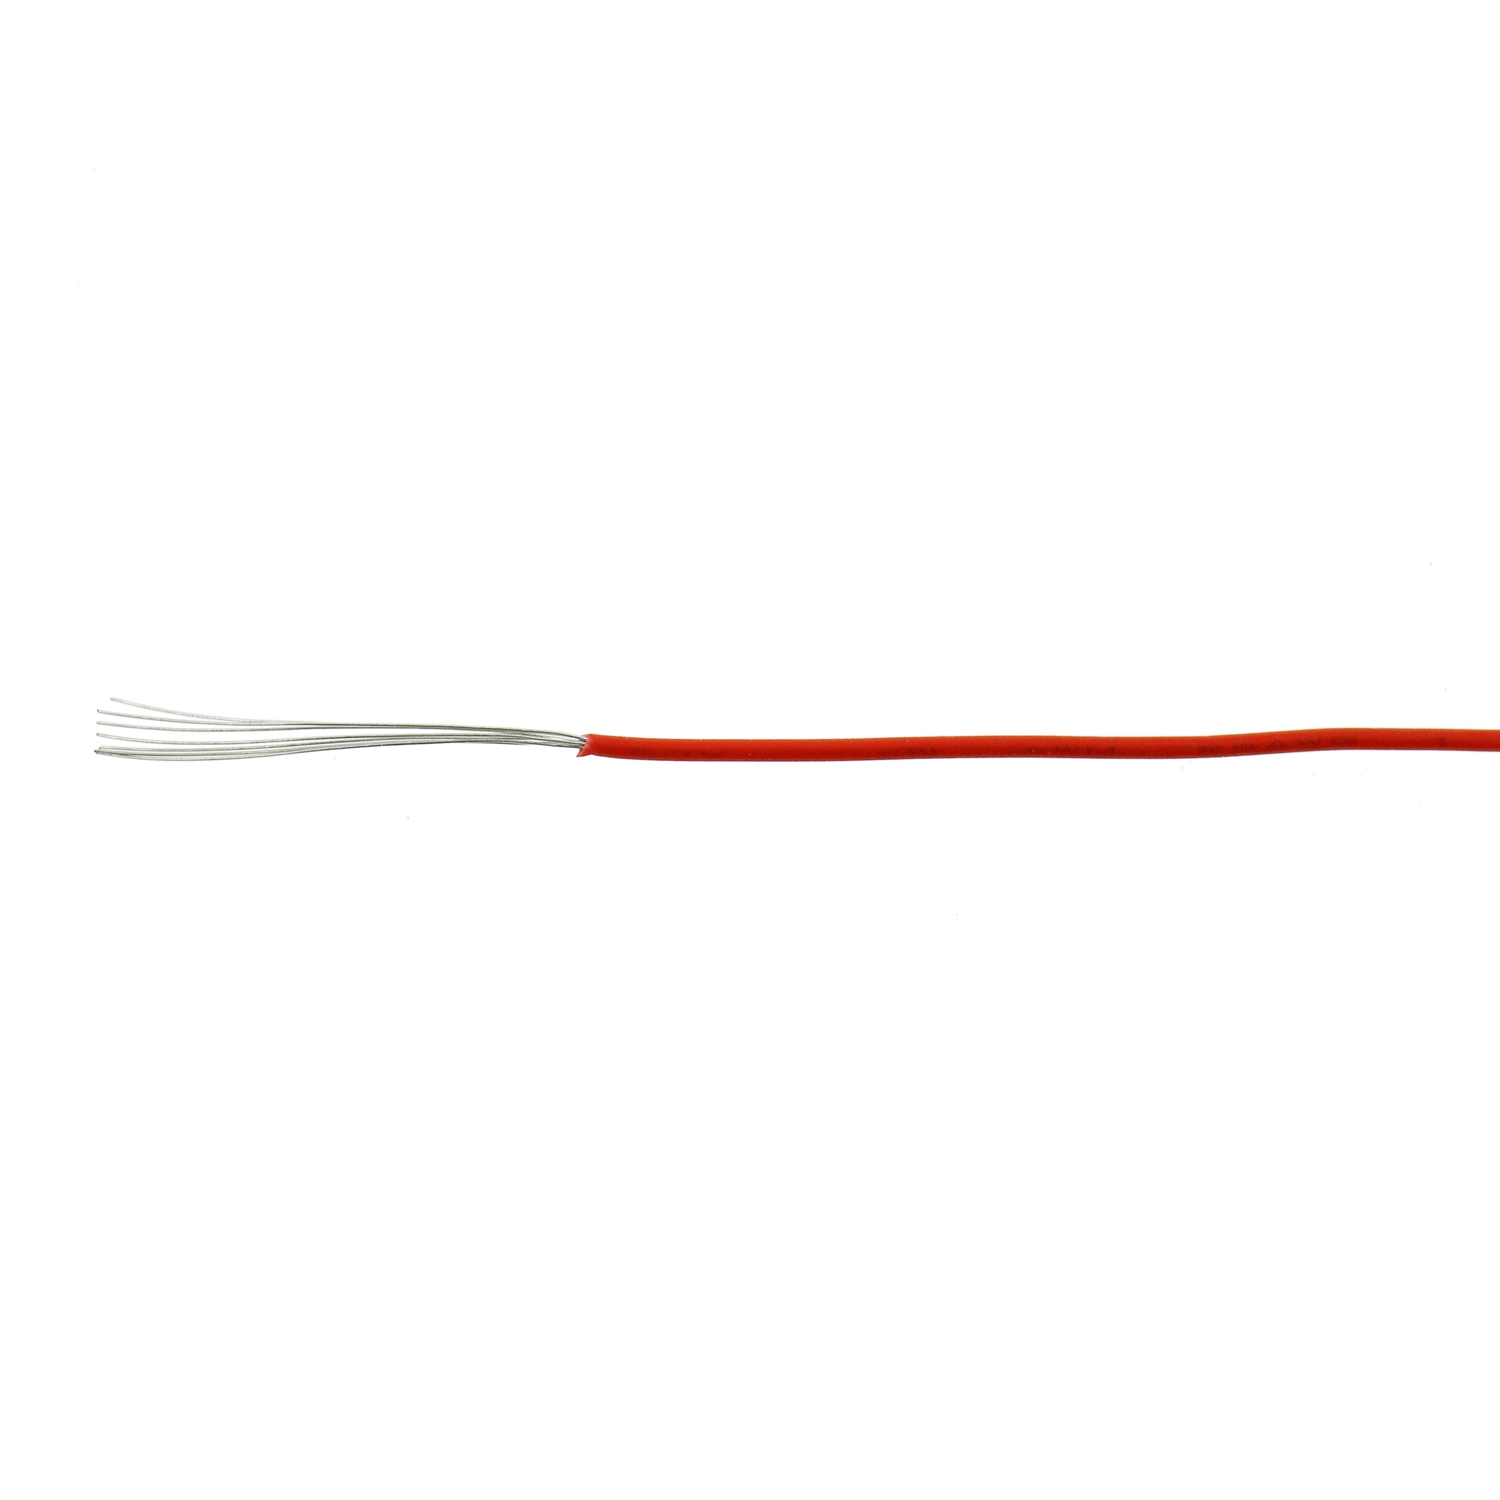 Cable para electrodomésticos de un solo núcleo UL3302 UL AWM